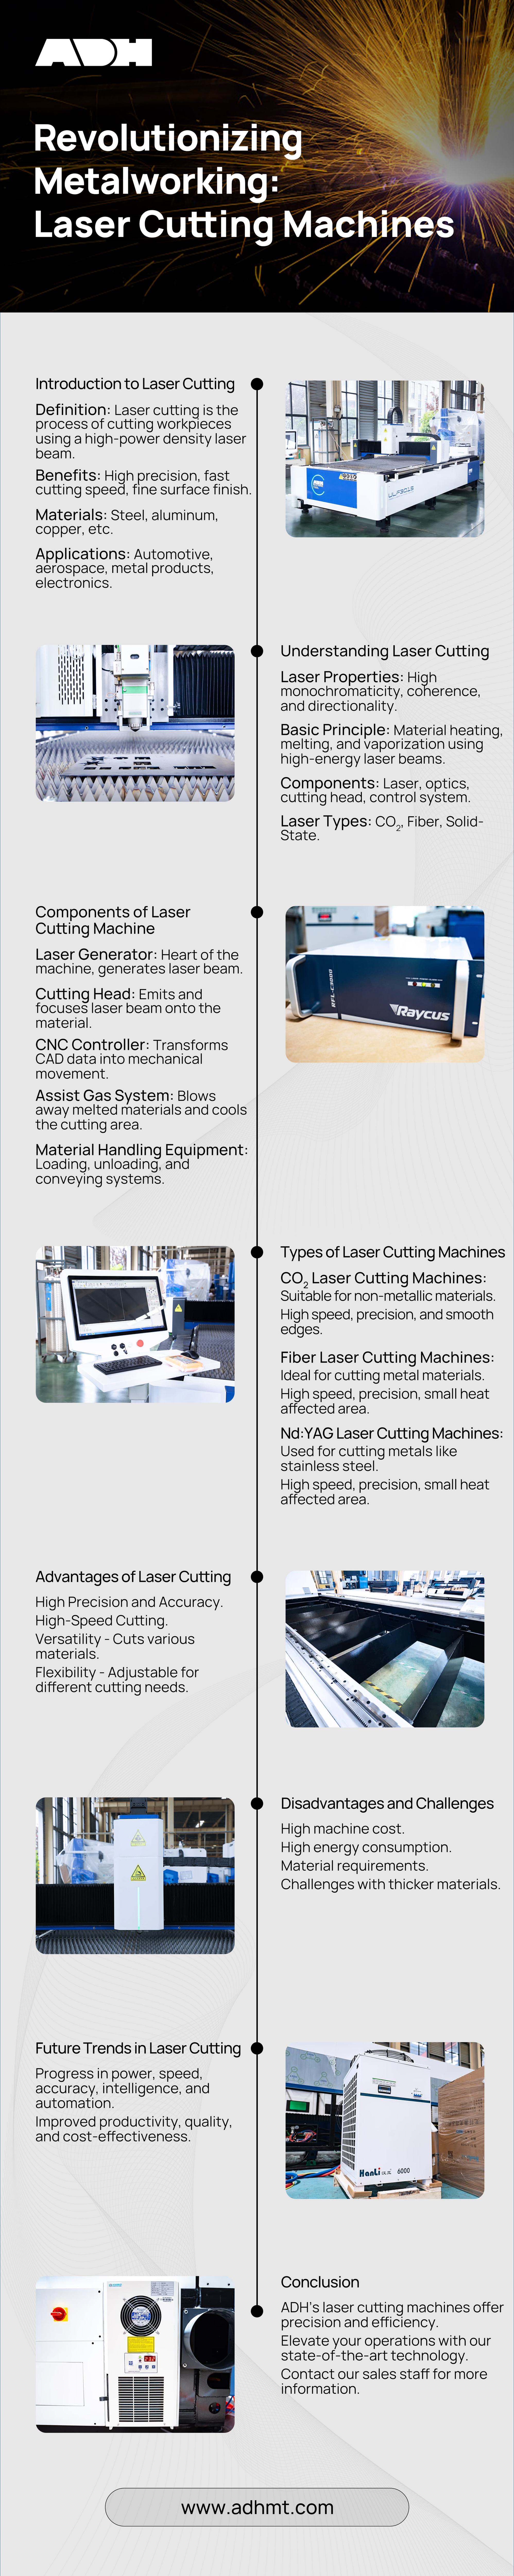 laser cutting machines infographic